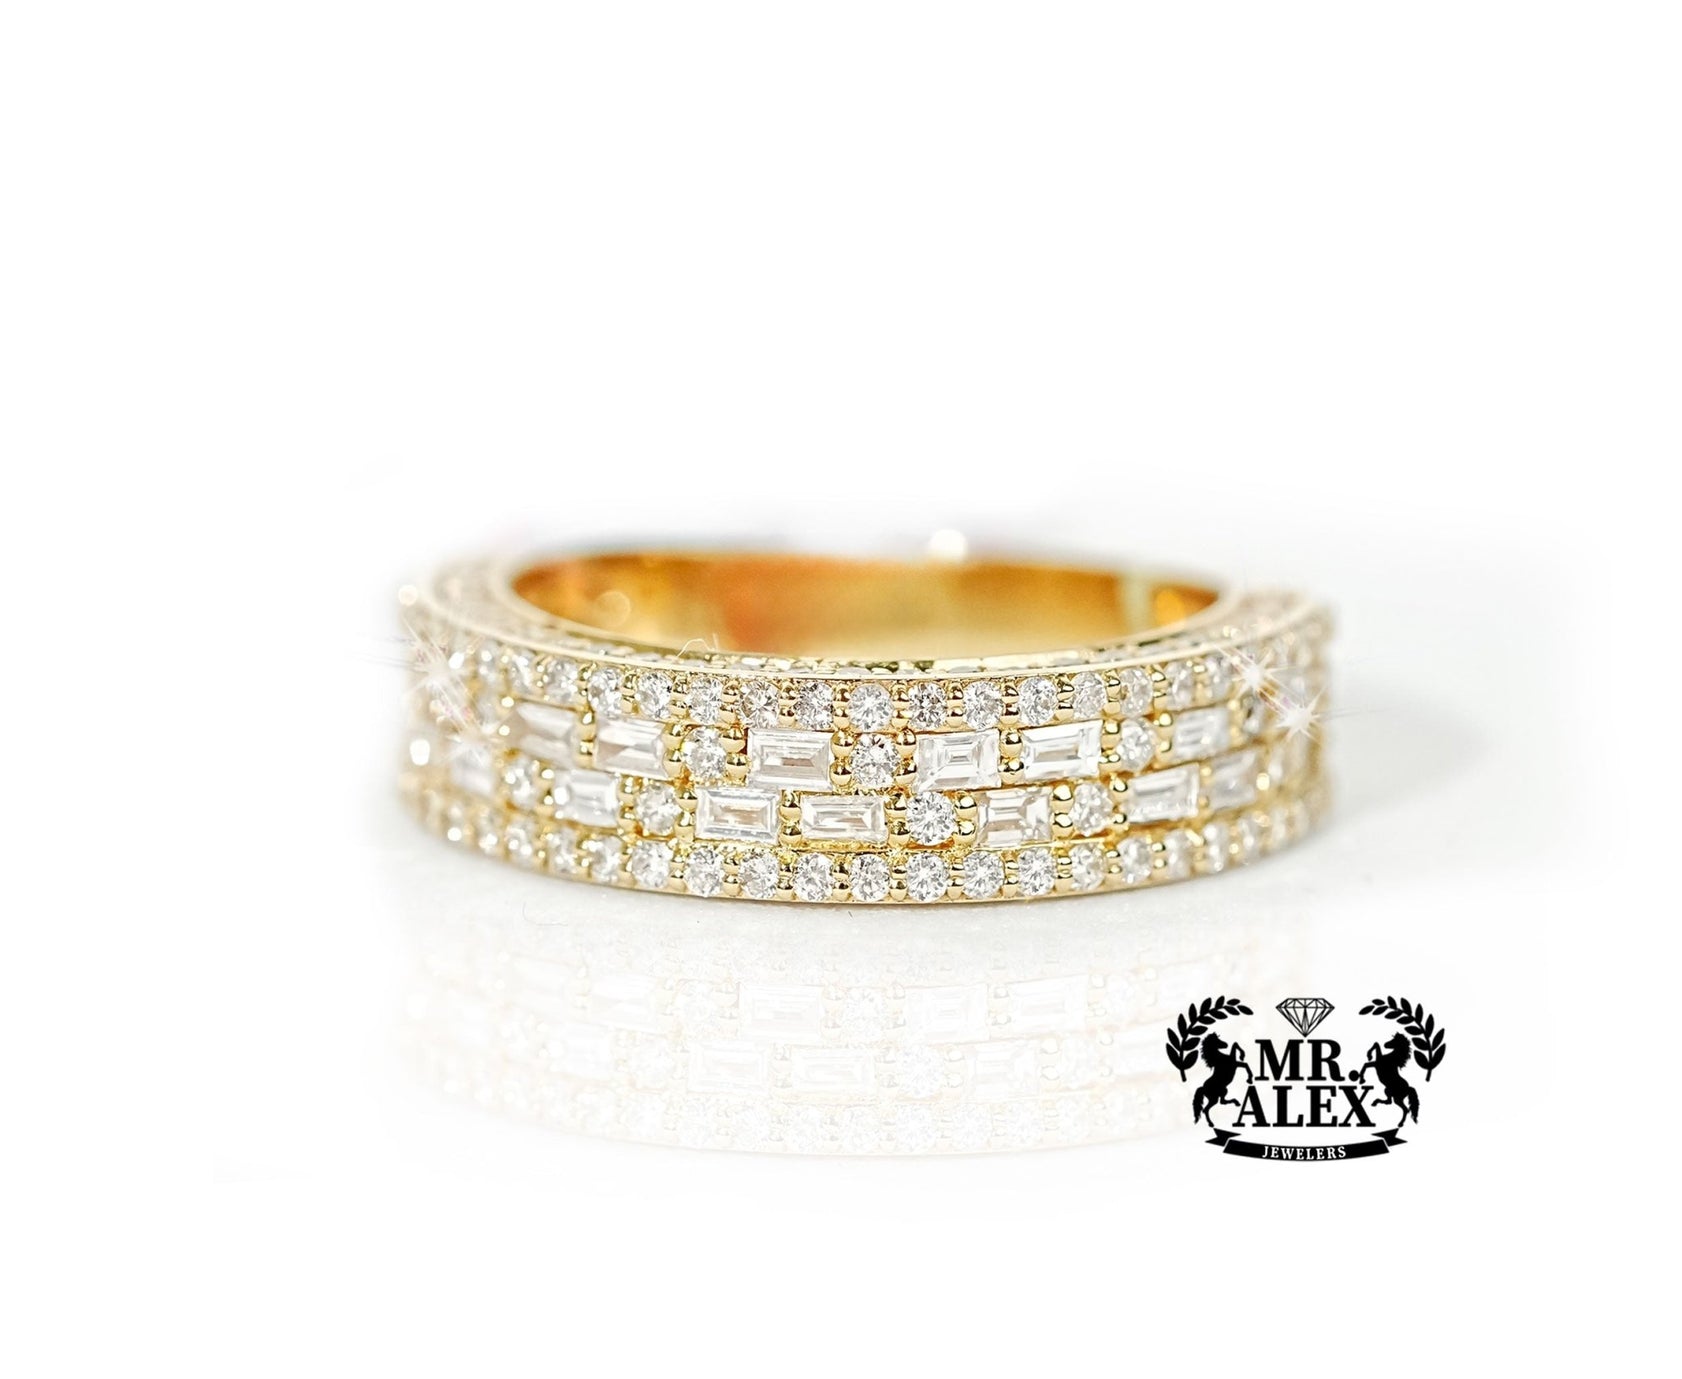 10k Gold Glimmering Rows Diamond Ring 1.25ct - Mr. Alex Jewelry